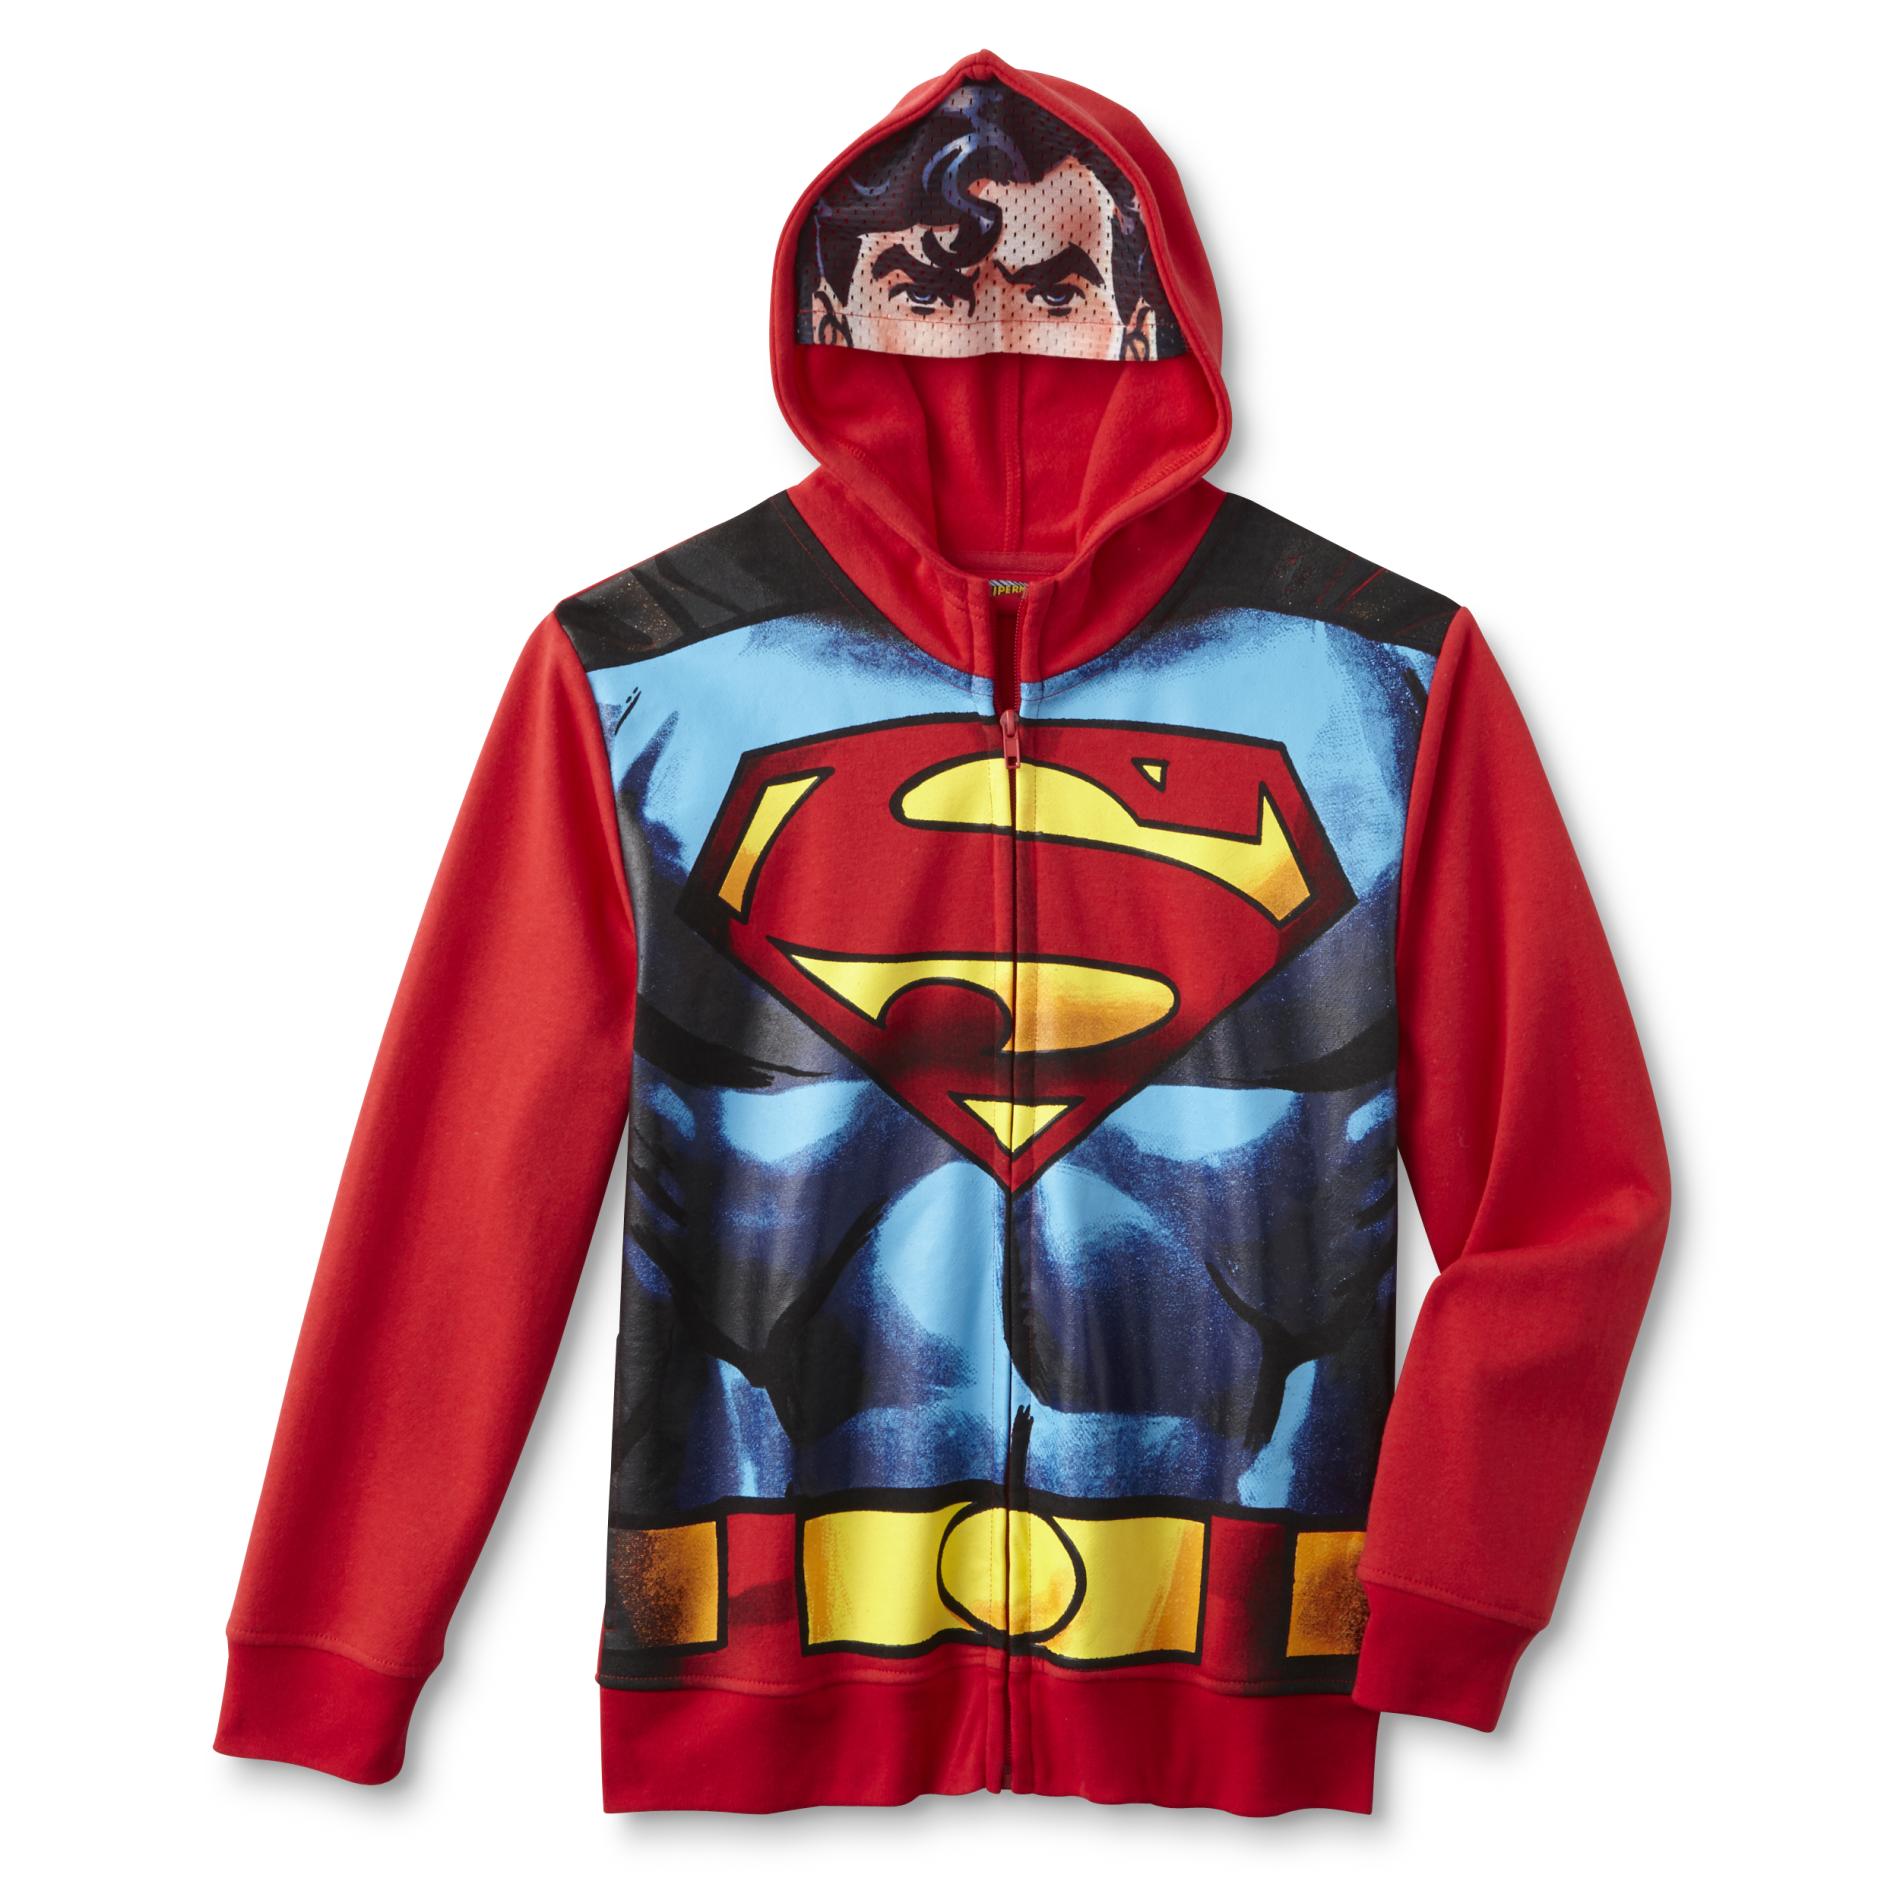 DC Comics Superman Boy's Costume Hoodie Jacket